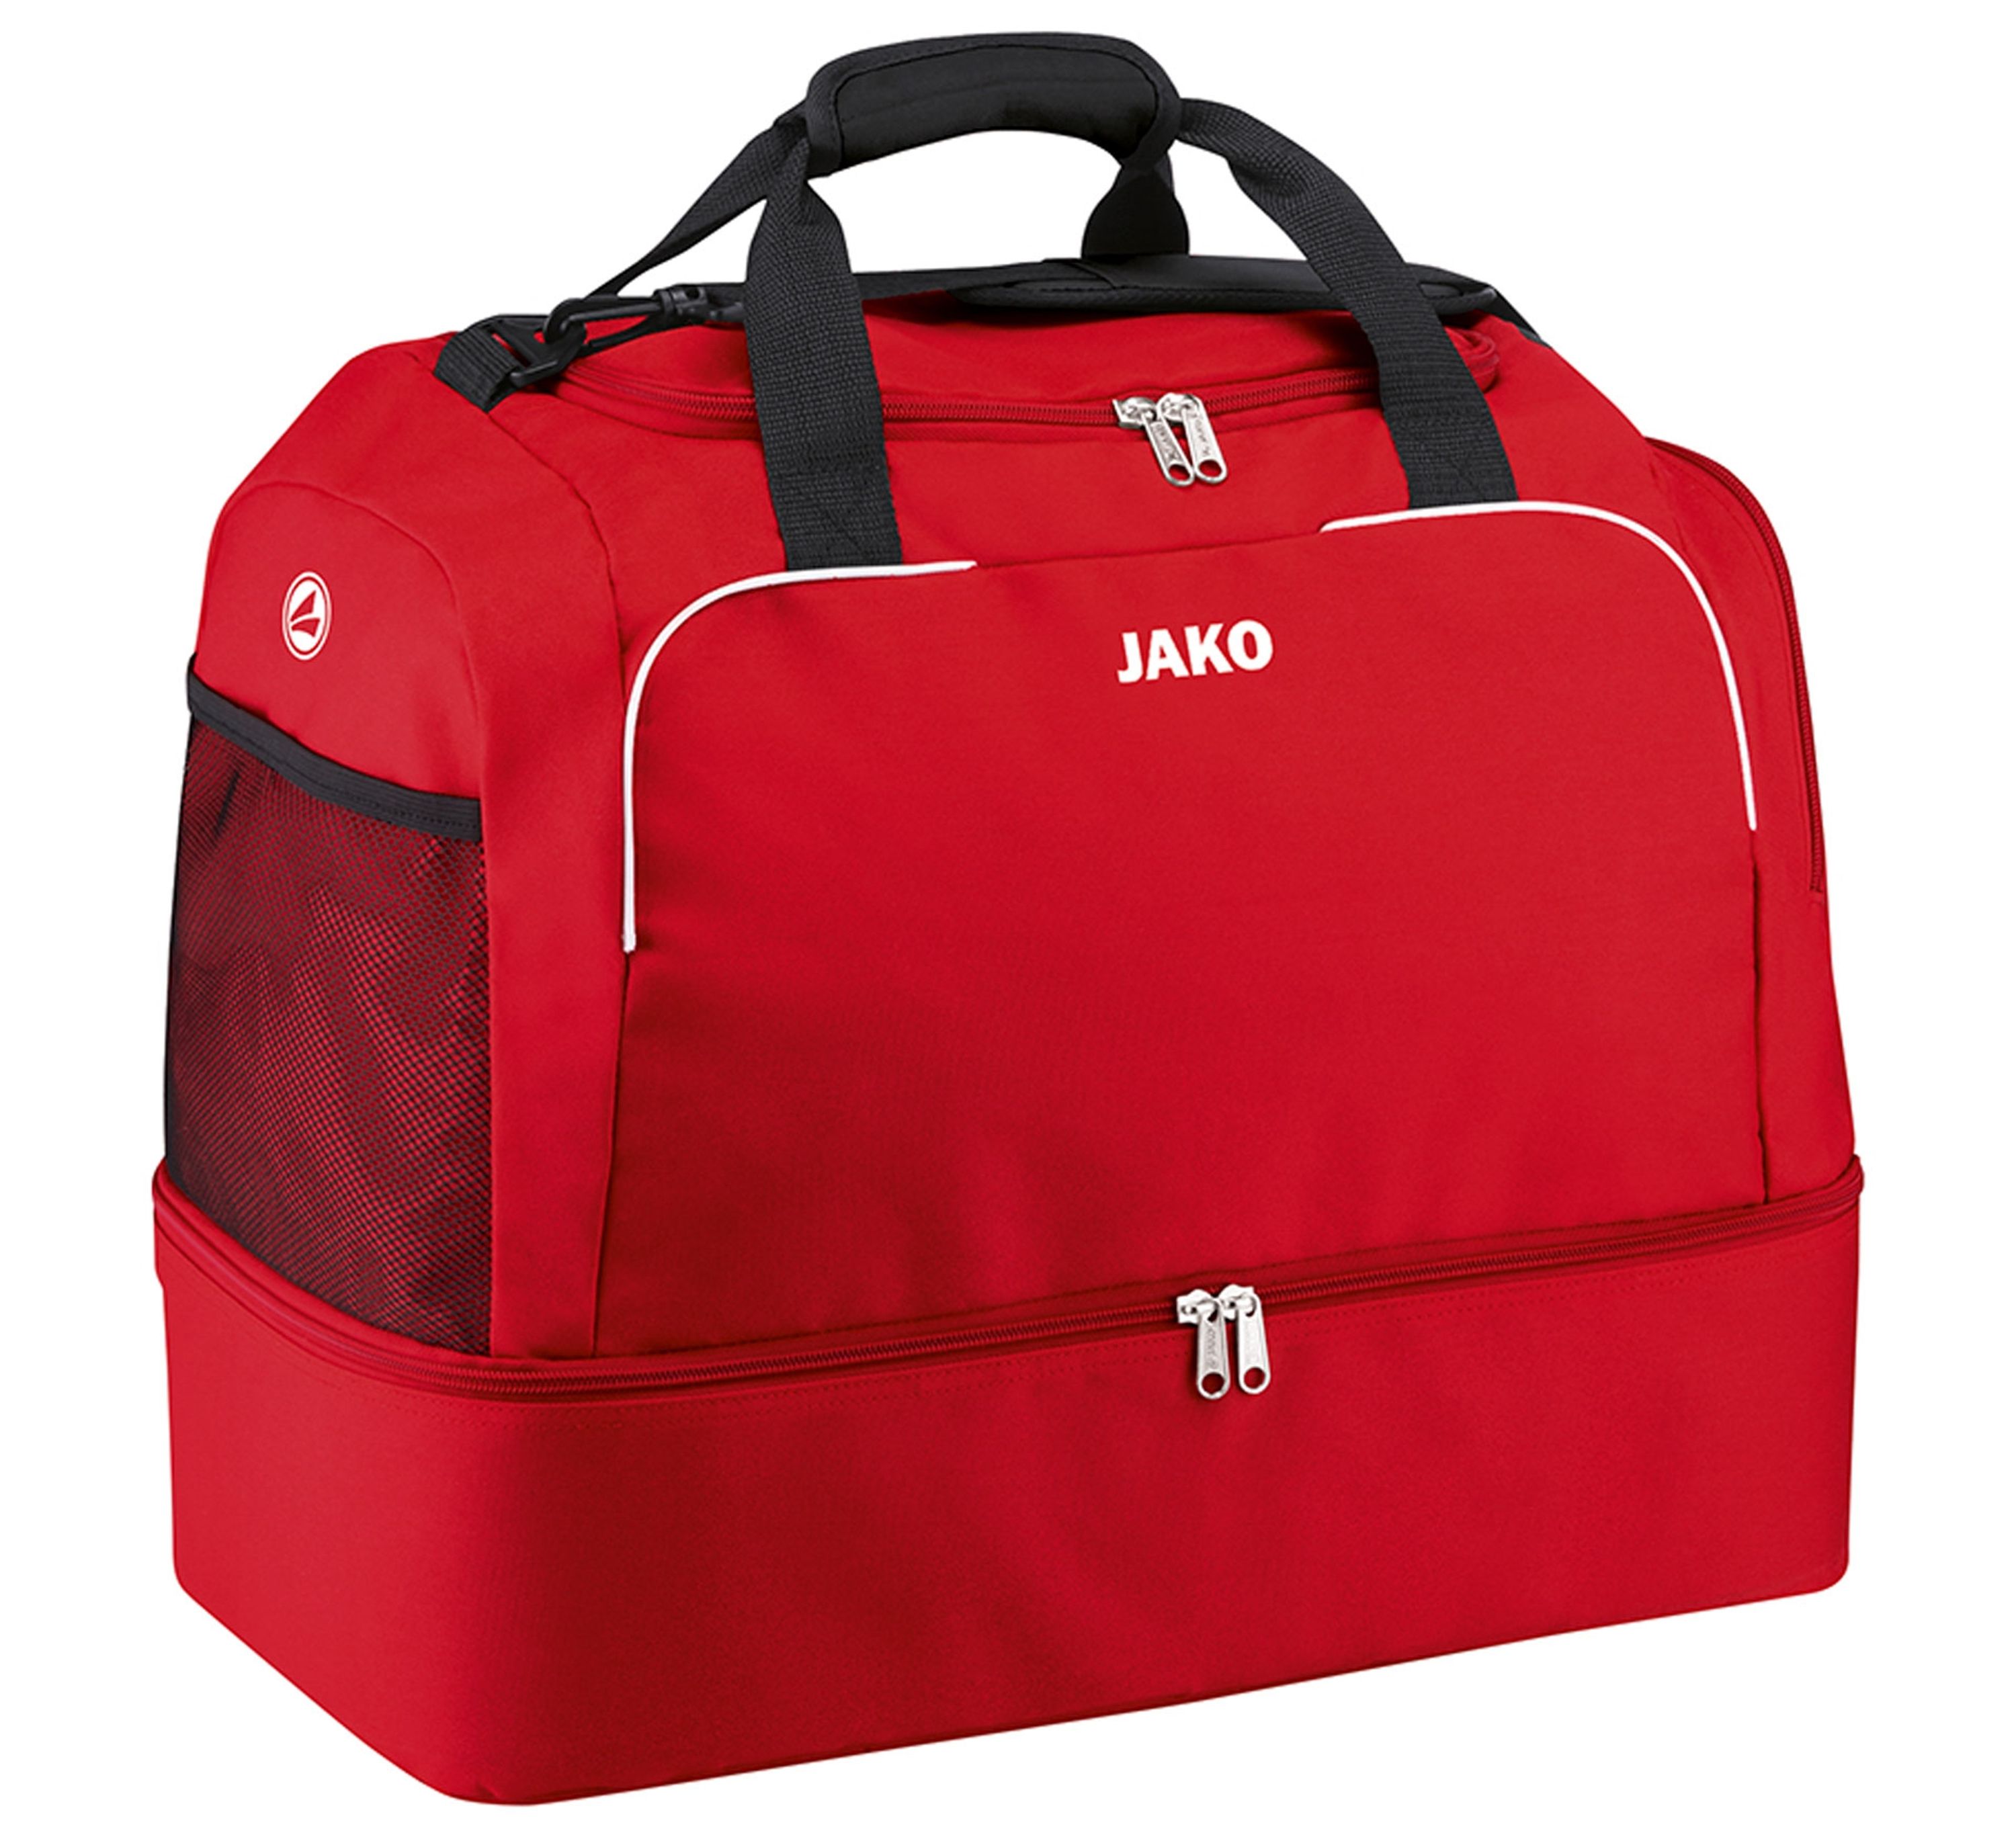 JAKO Classico Sporttasche mit Bodenfach rot Bambini (25 Liter)